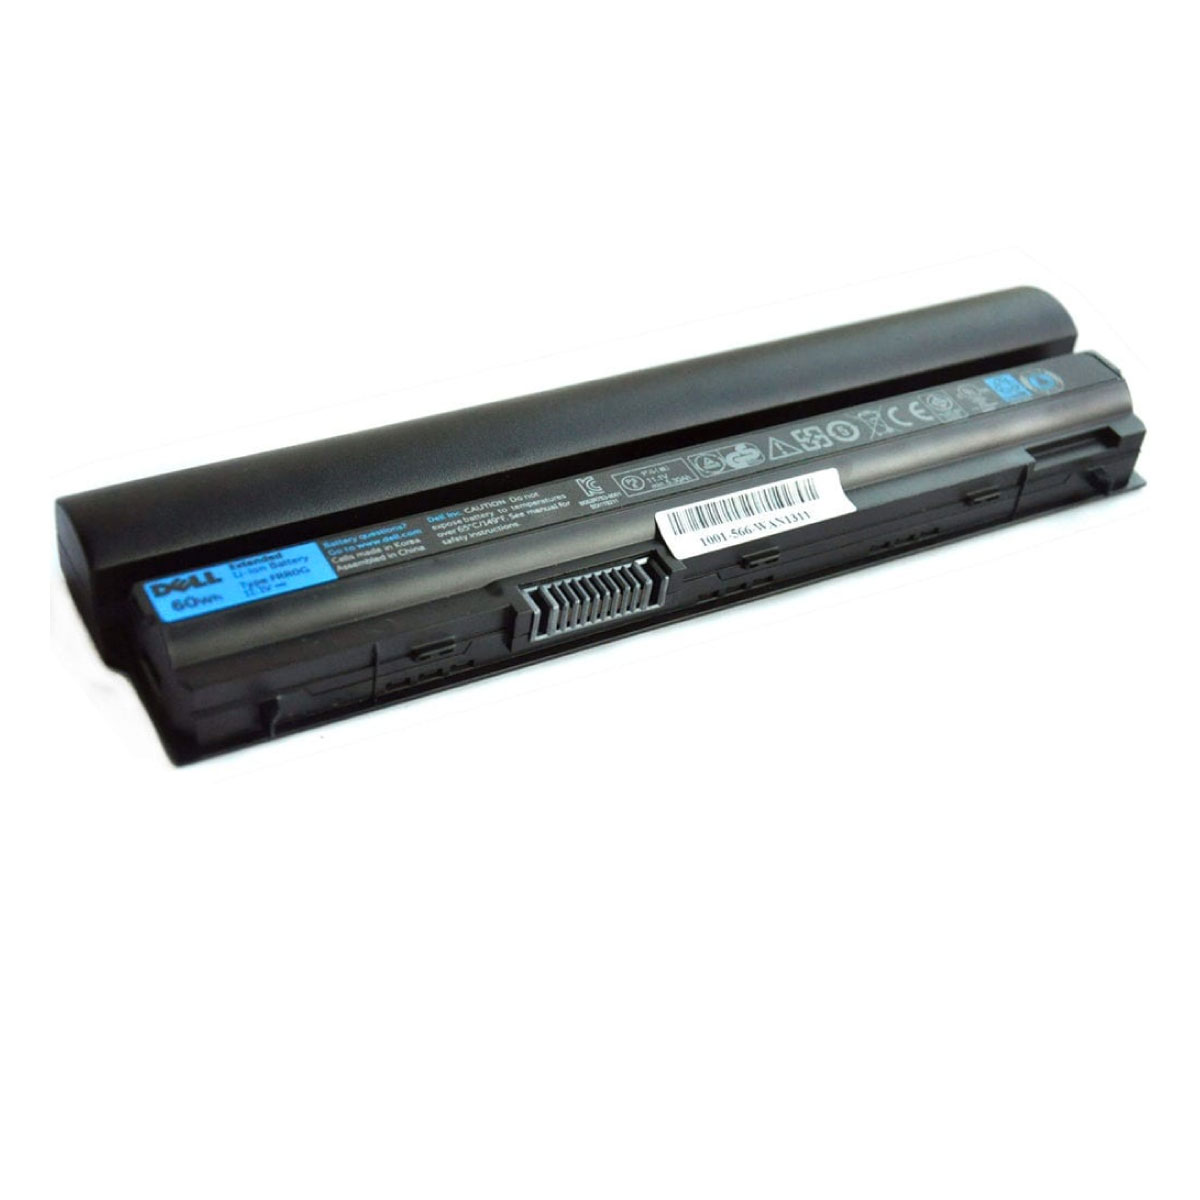 Dell Latitude E6430s Laptop Battery (C) | Worthit